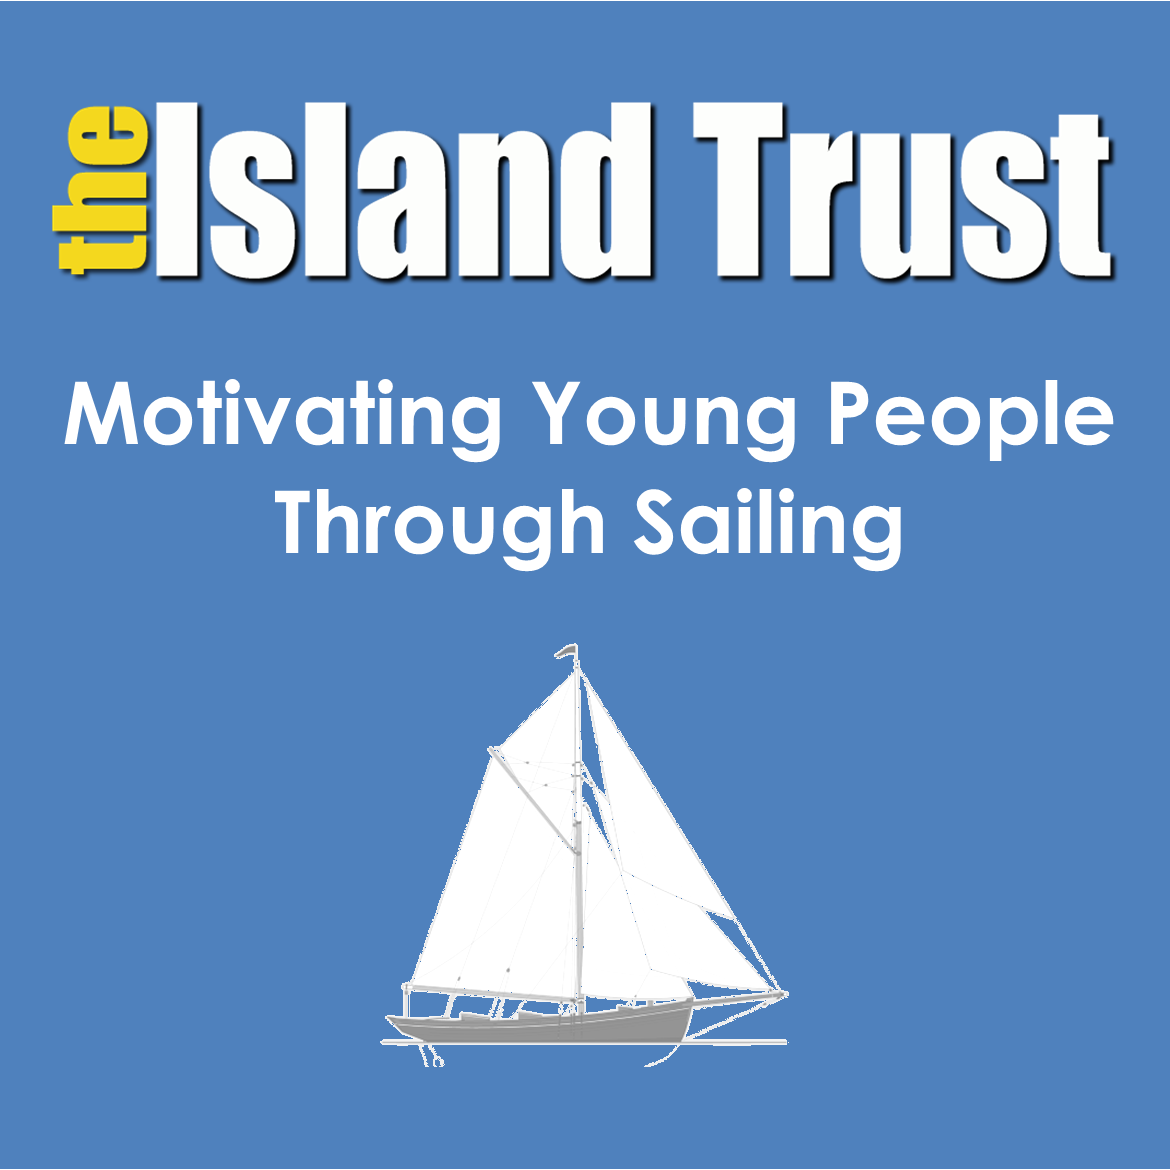 The Island Trust logo